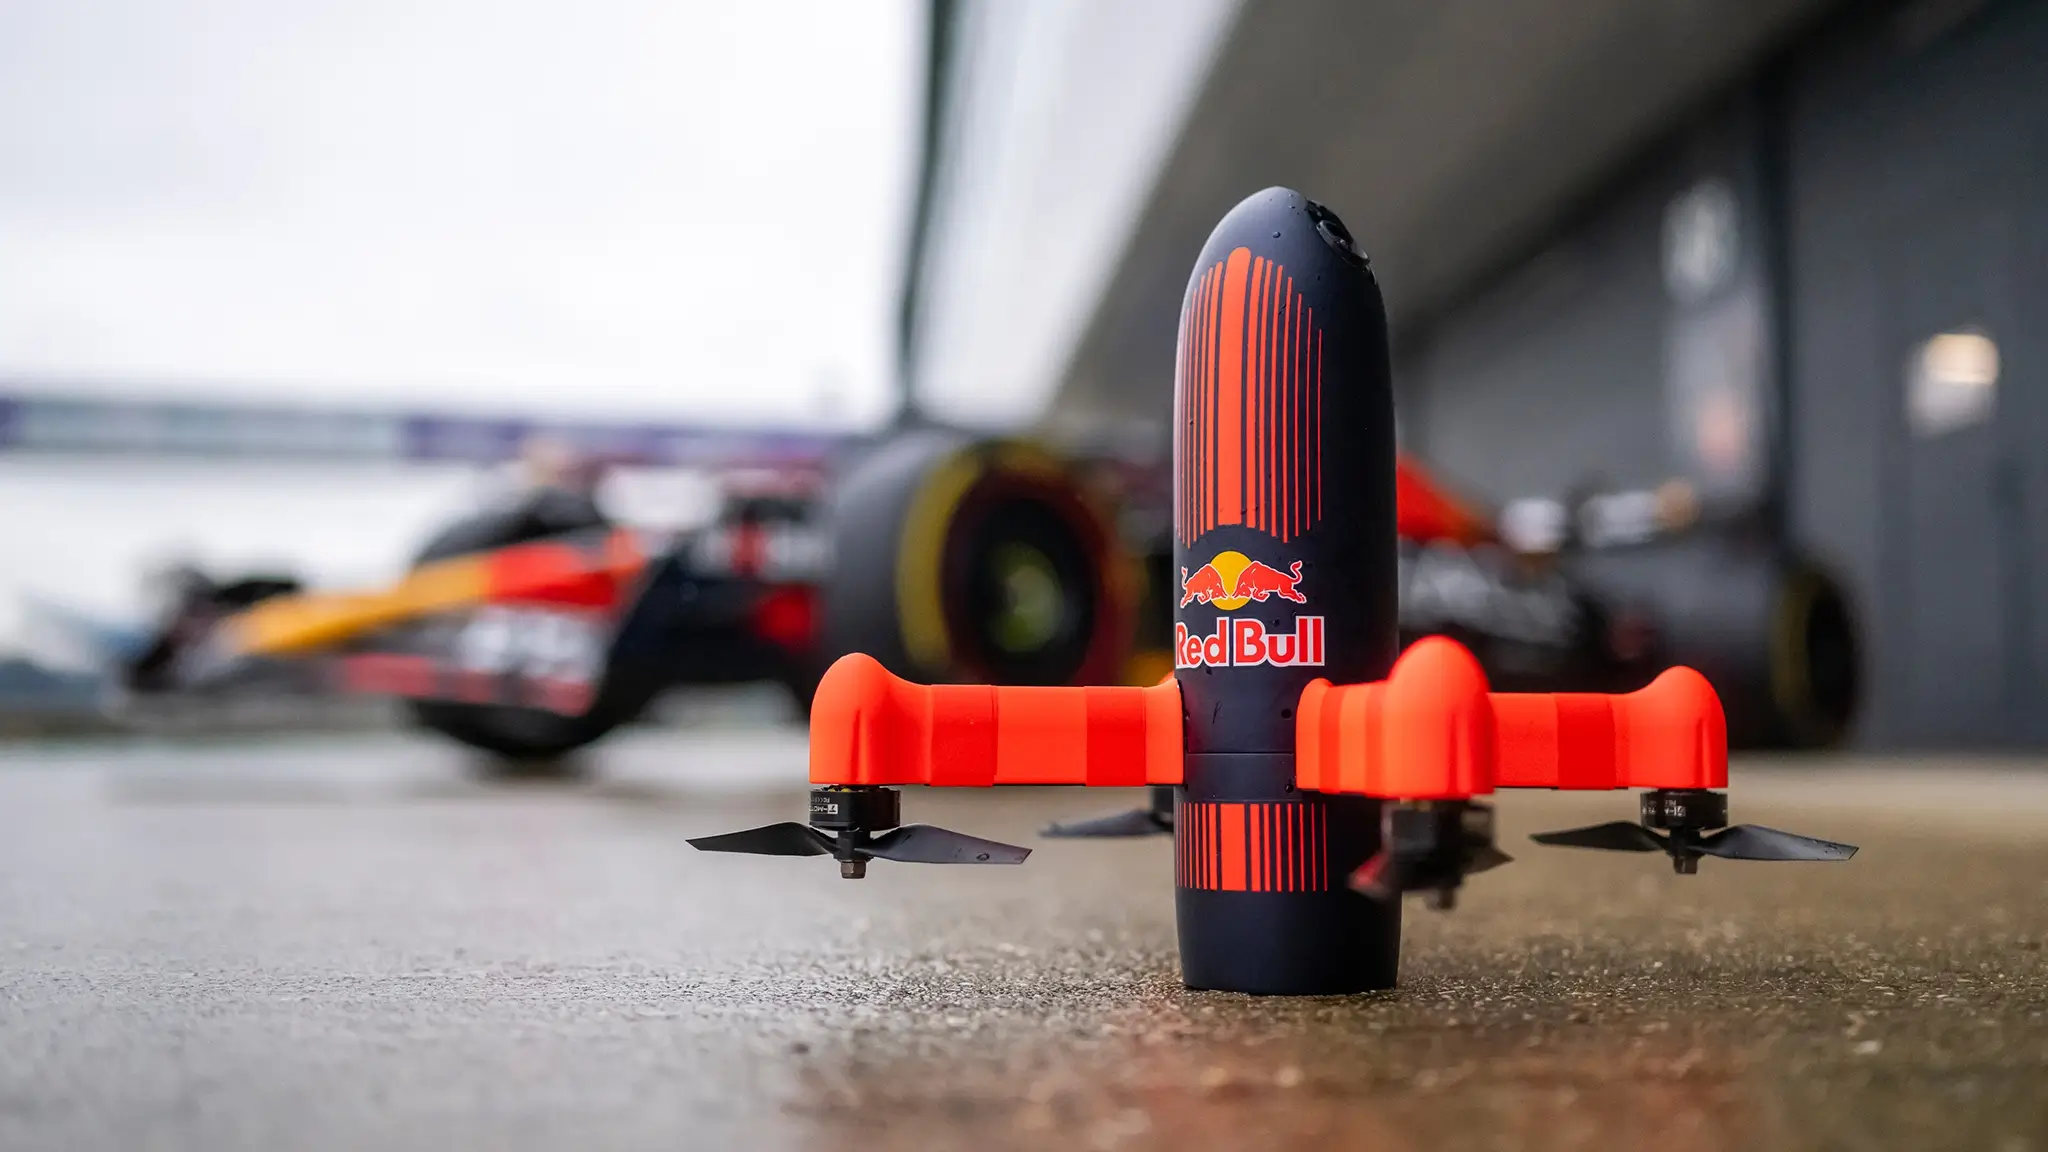 Red Bull F1 Drone Max Verstappen - drone